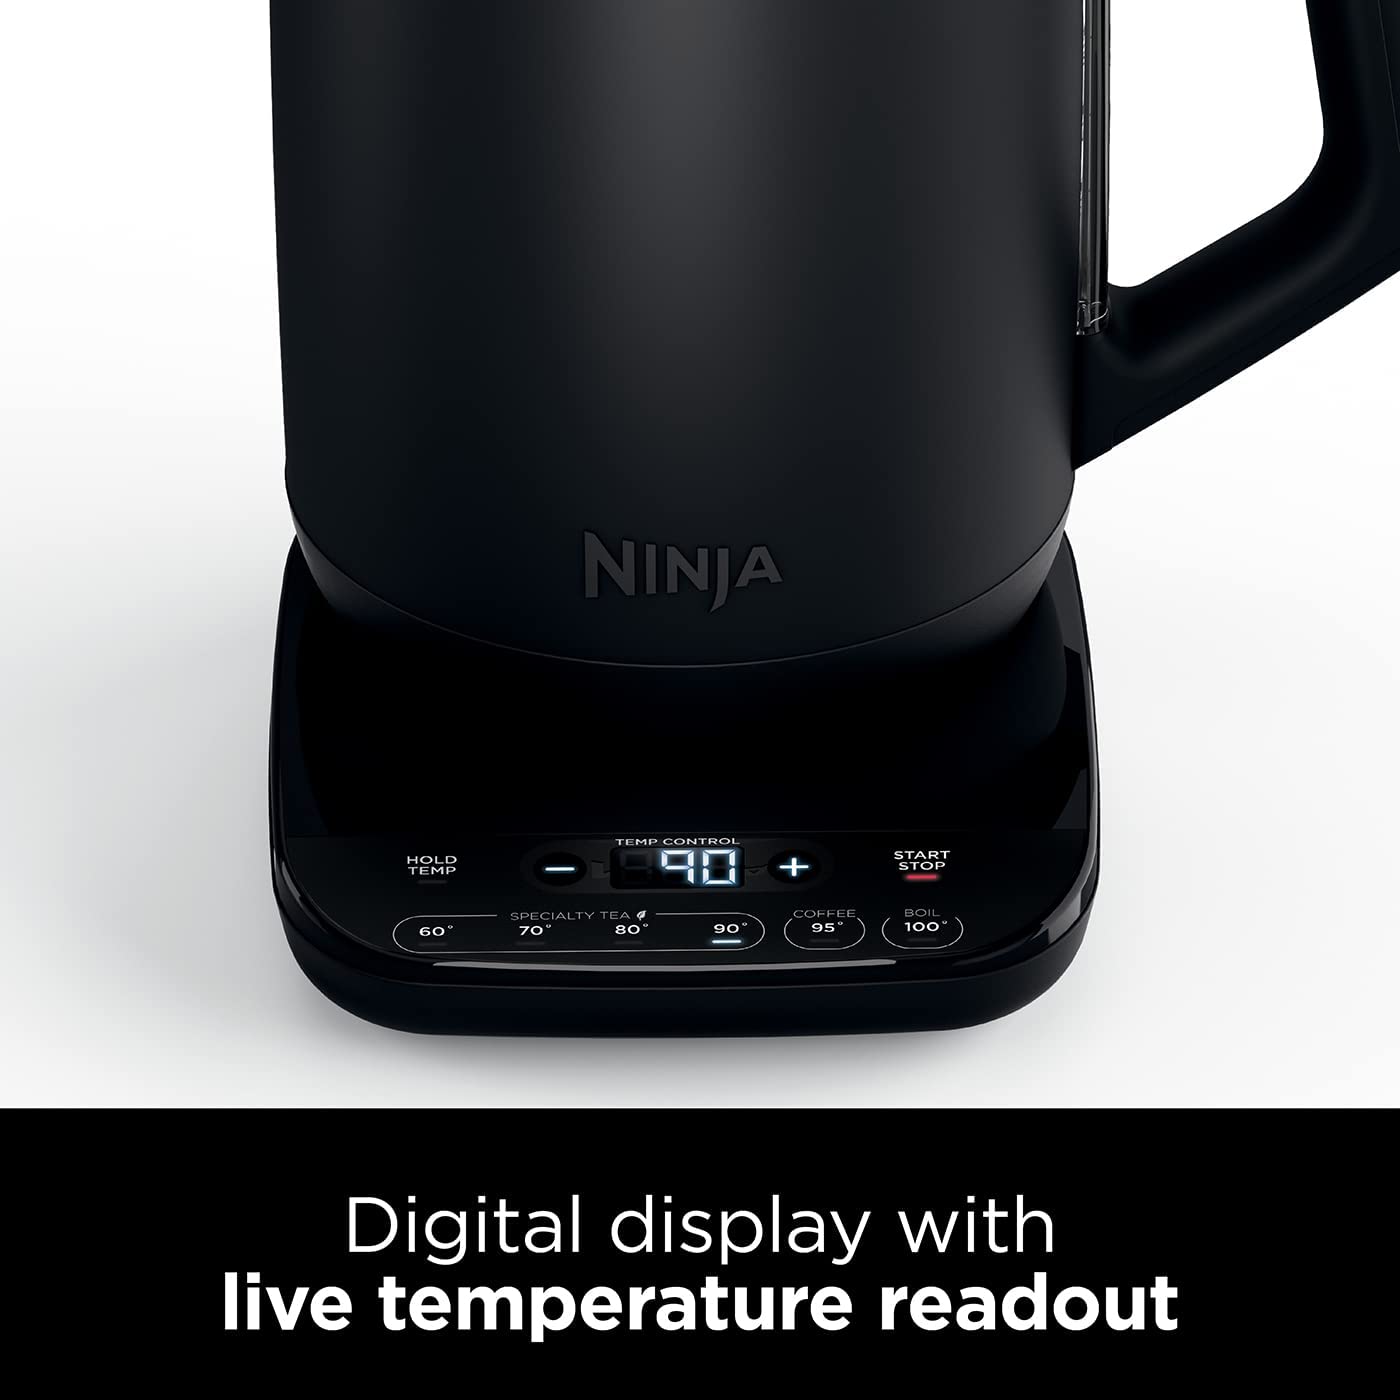 Ninja Perfect Temperature Rapid Boil Kettle